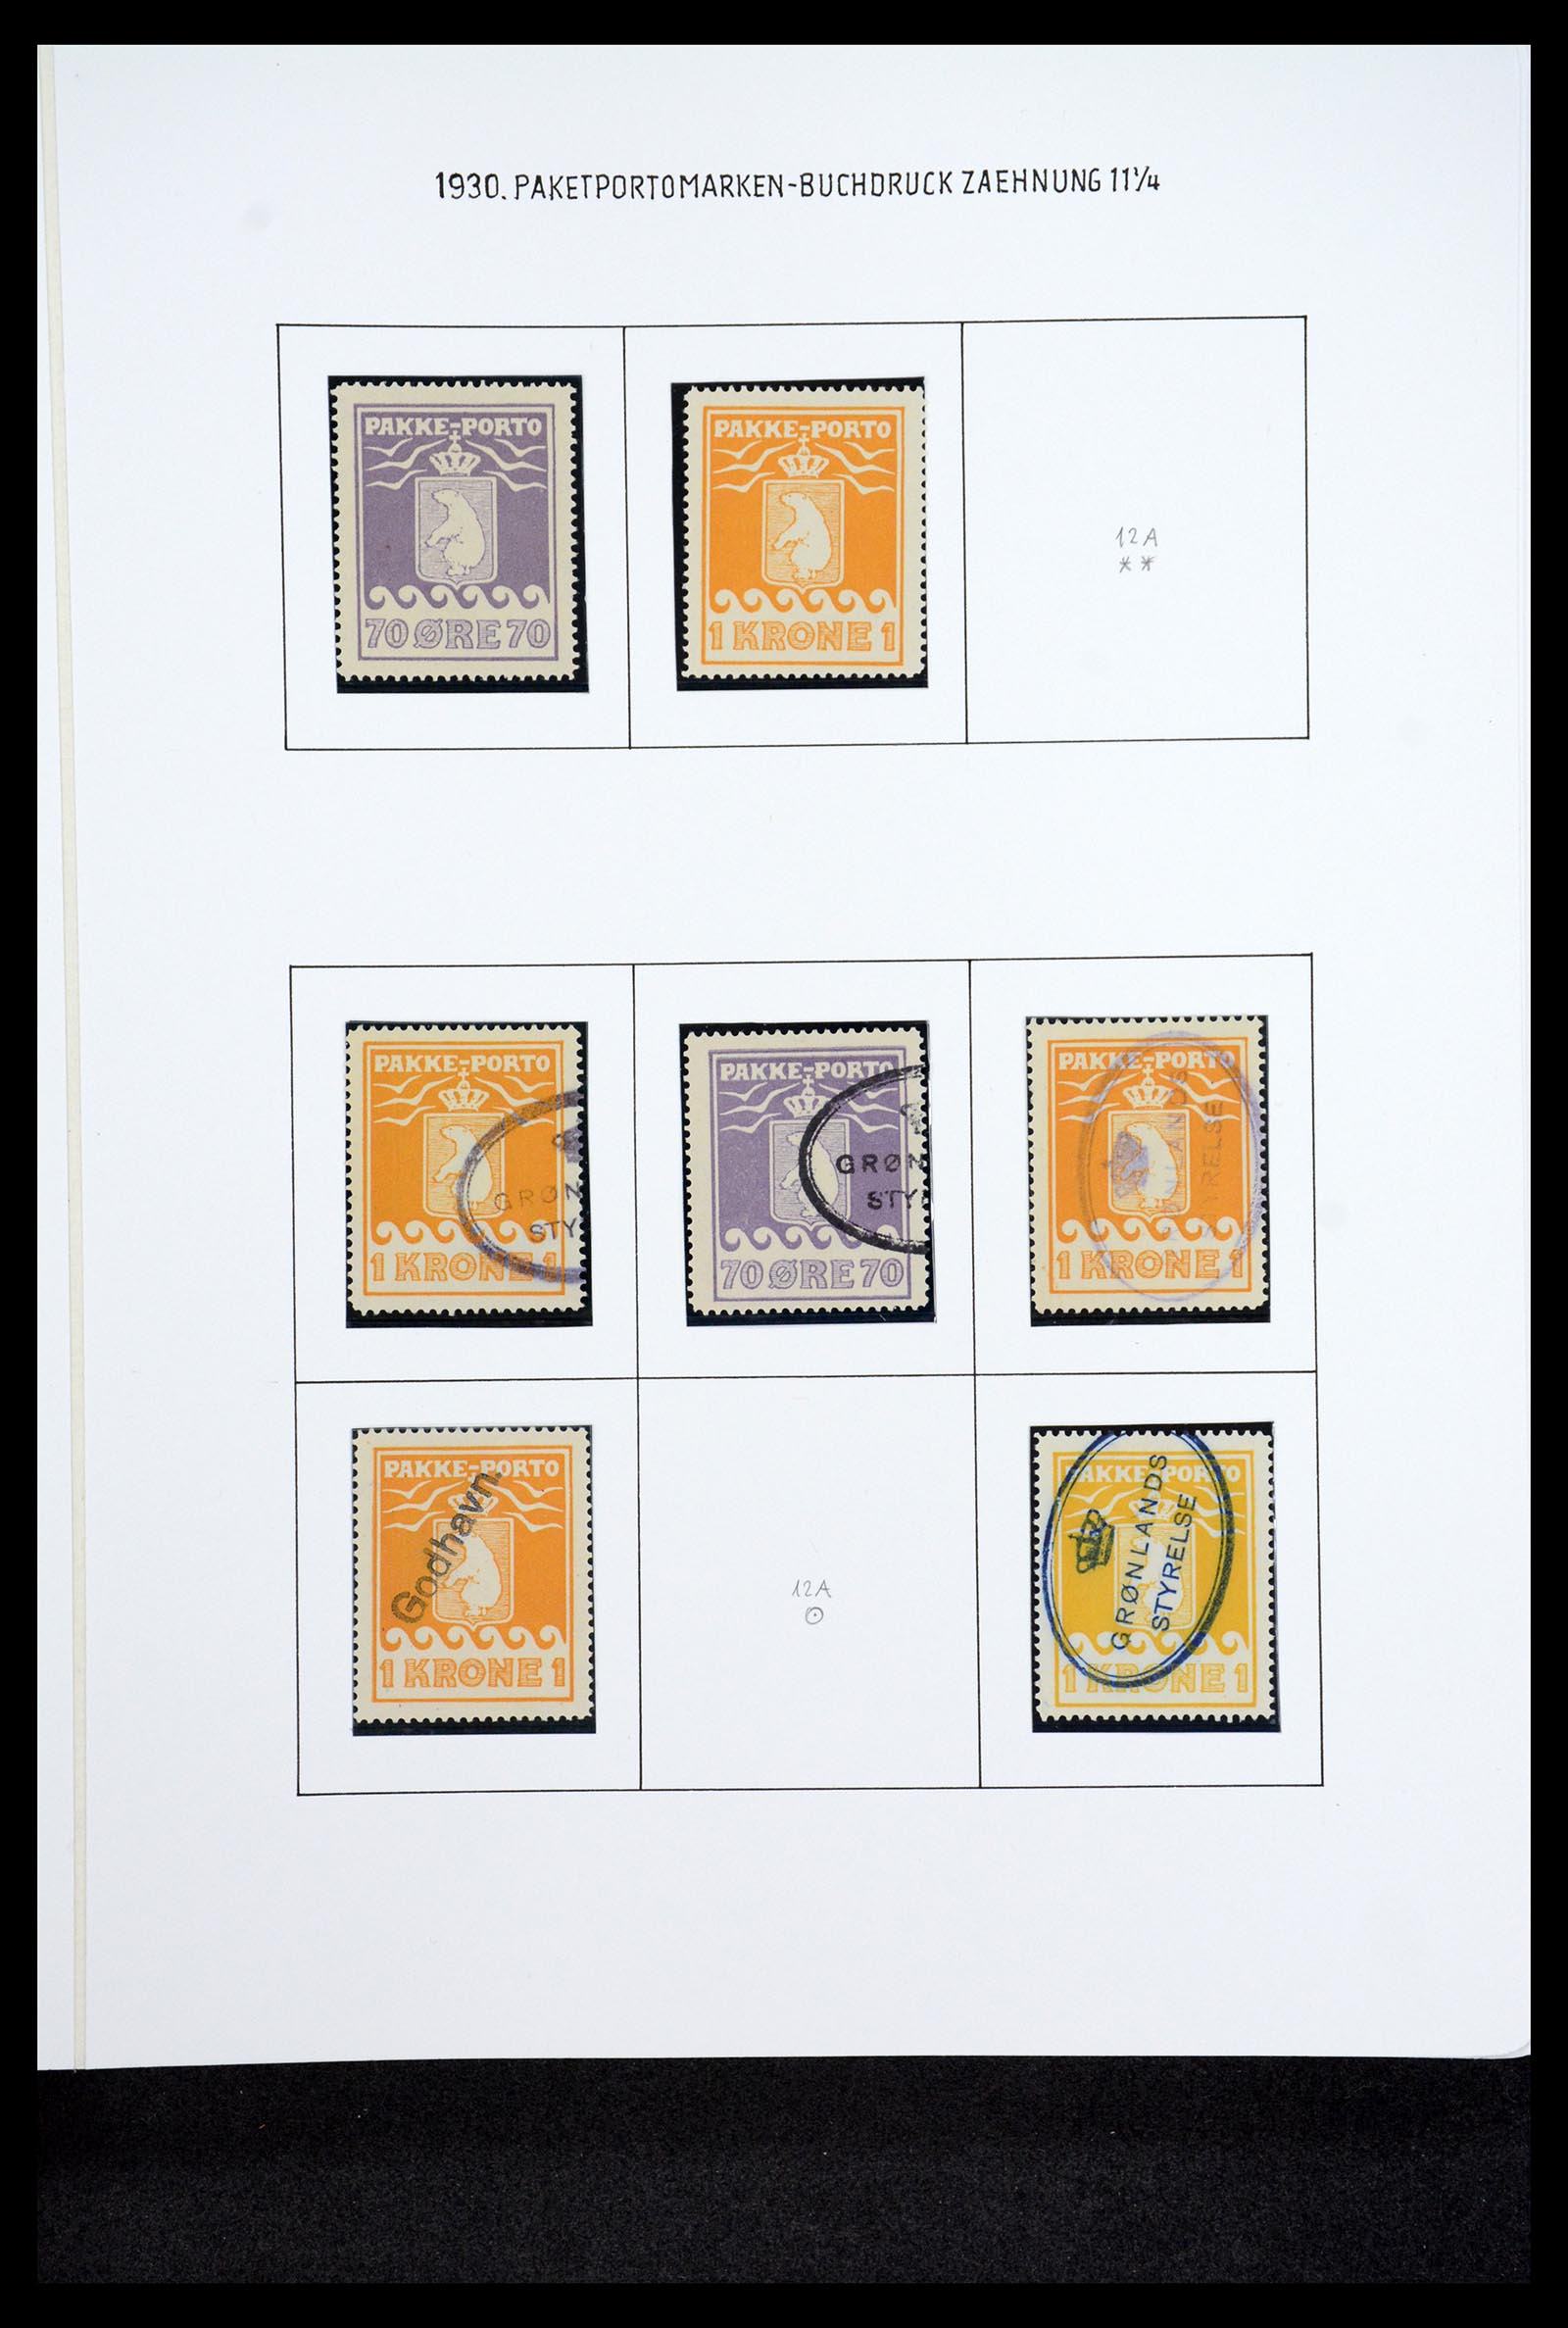 36748 005 - Stamp collection 36748 Greenland pakke-porto 1905-1930.